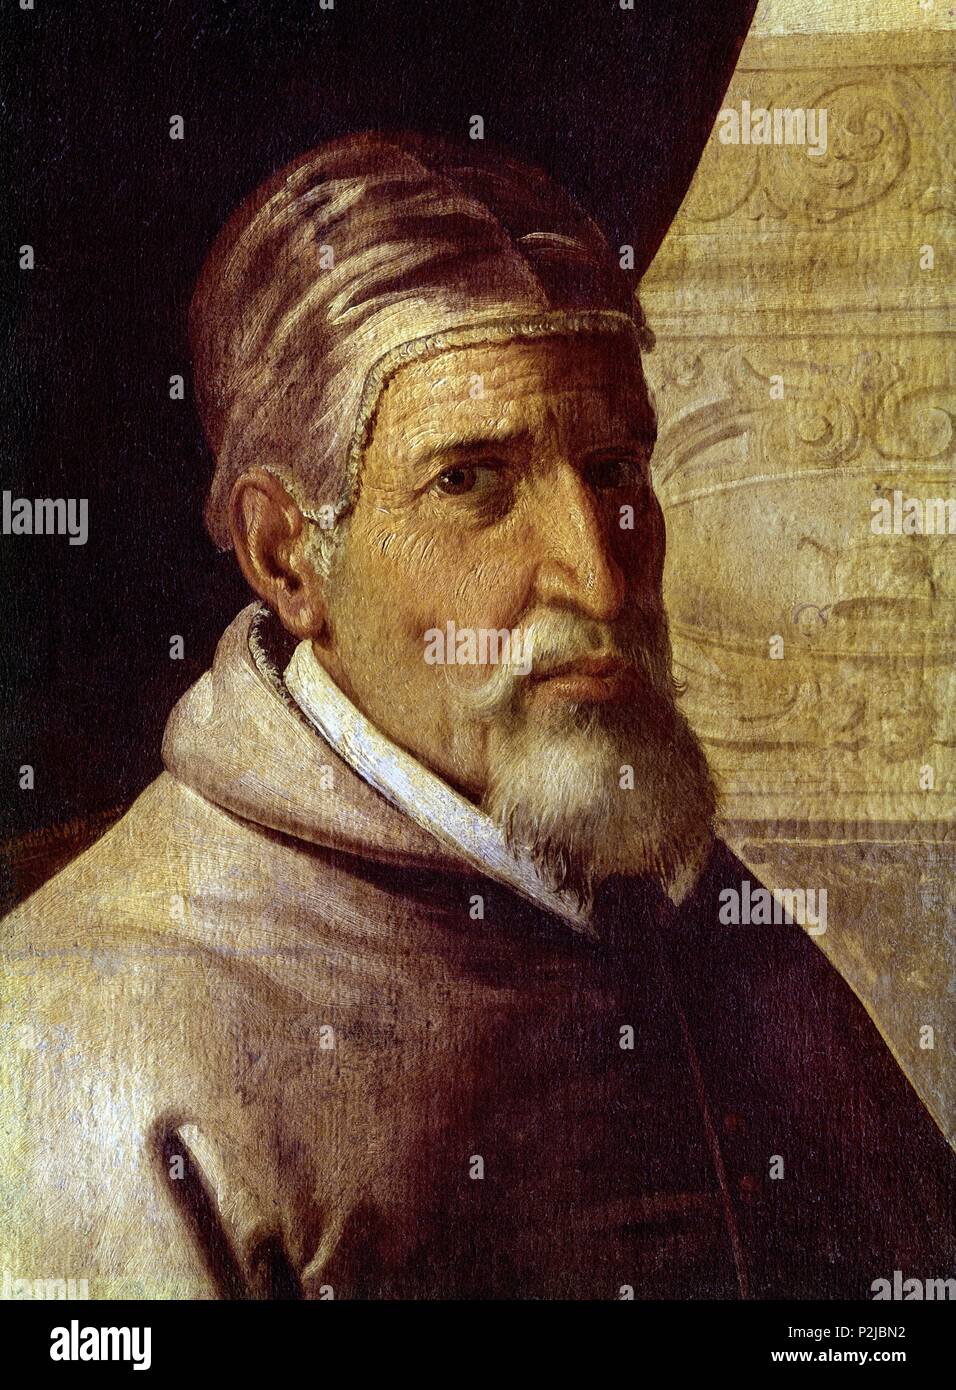 Saint Bruno and Urban II' (detail), c. 1630-1635, Oil on canvas. Author: Francisco de Zurbaran (c. 1598-1664). Location: MUSEO DE BELLAS ARTES-CONVENTO DE LA MERCED CALZAD, SEVILLA, SEVILLE, SPAIN Stock Photo -